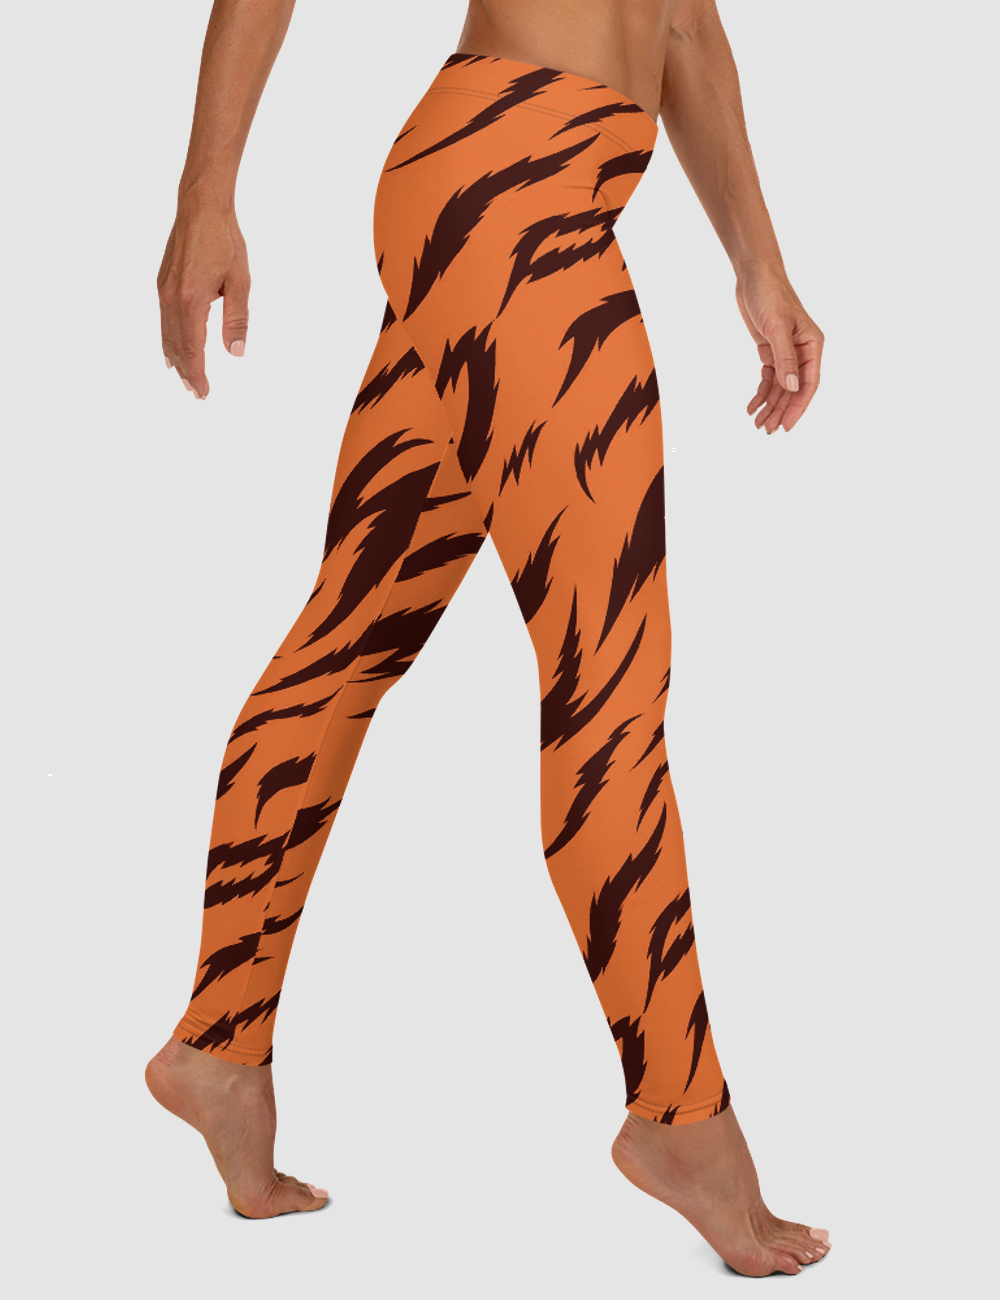 Orange Tiger Stripes | Women's Standard Yoga Leggings OniTakai